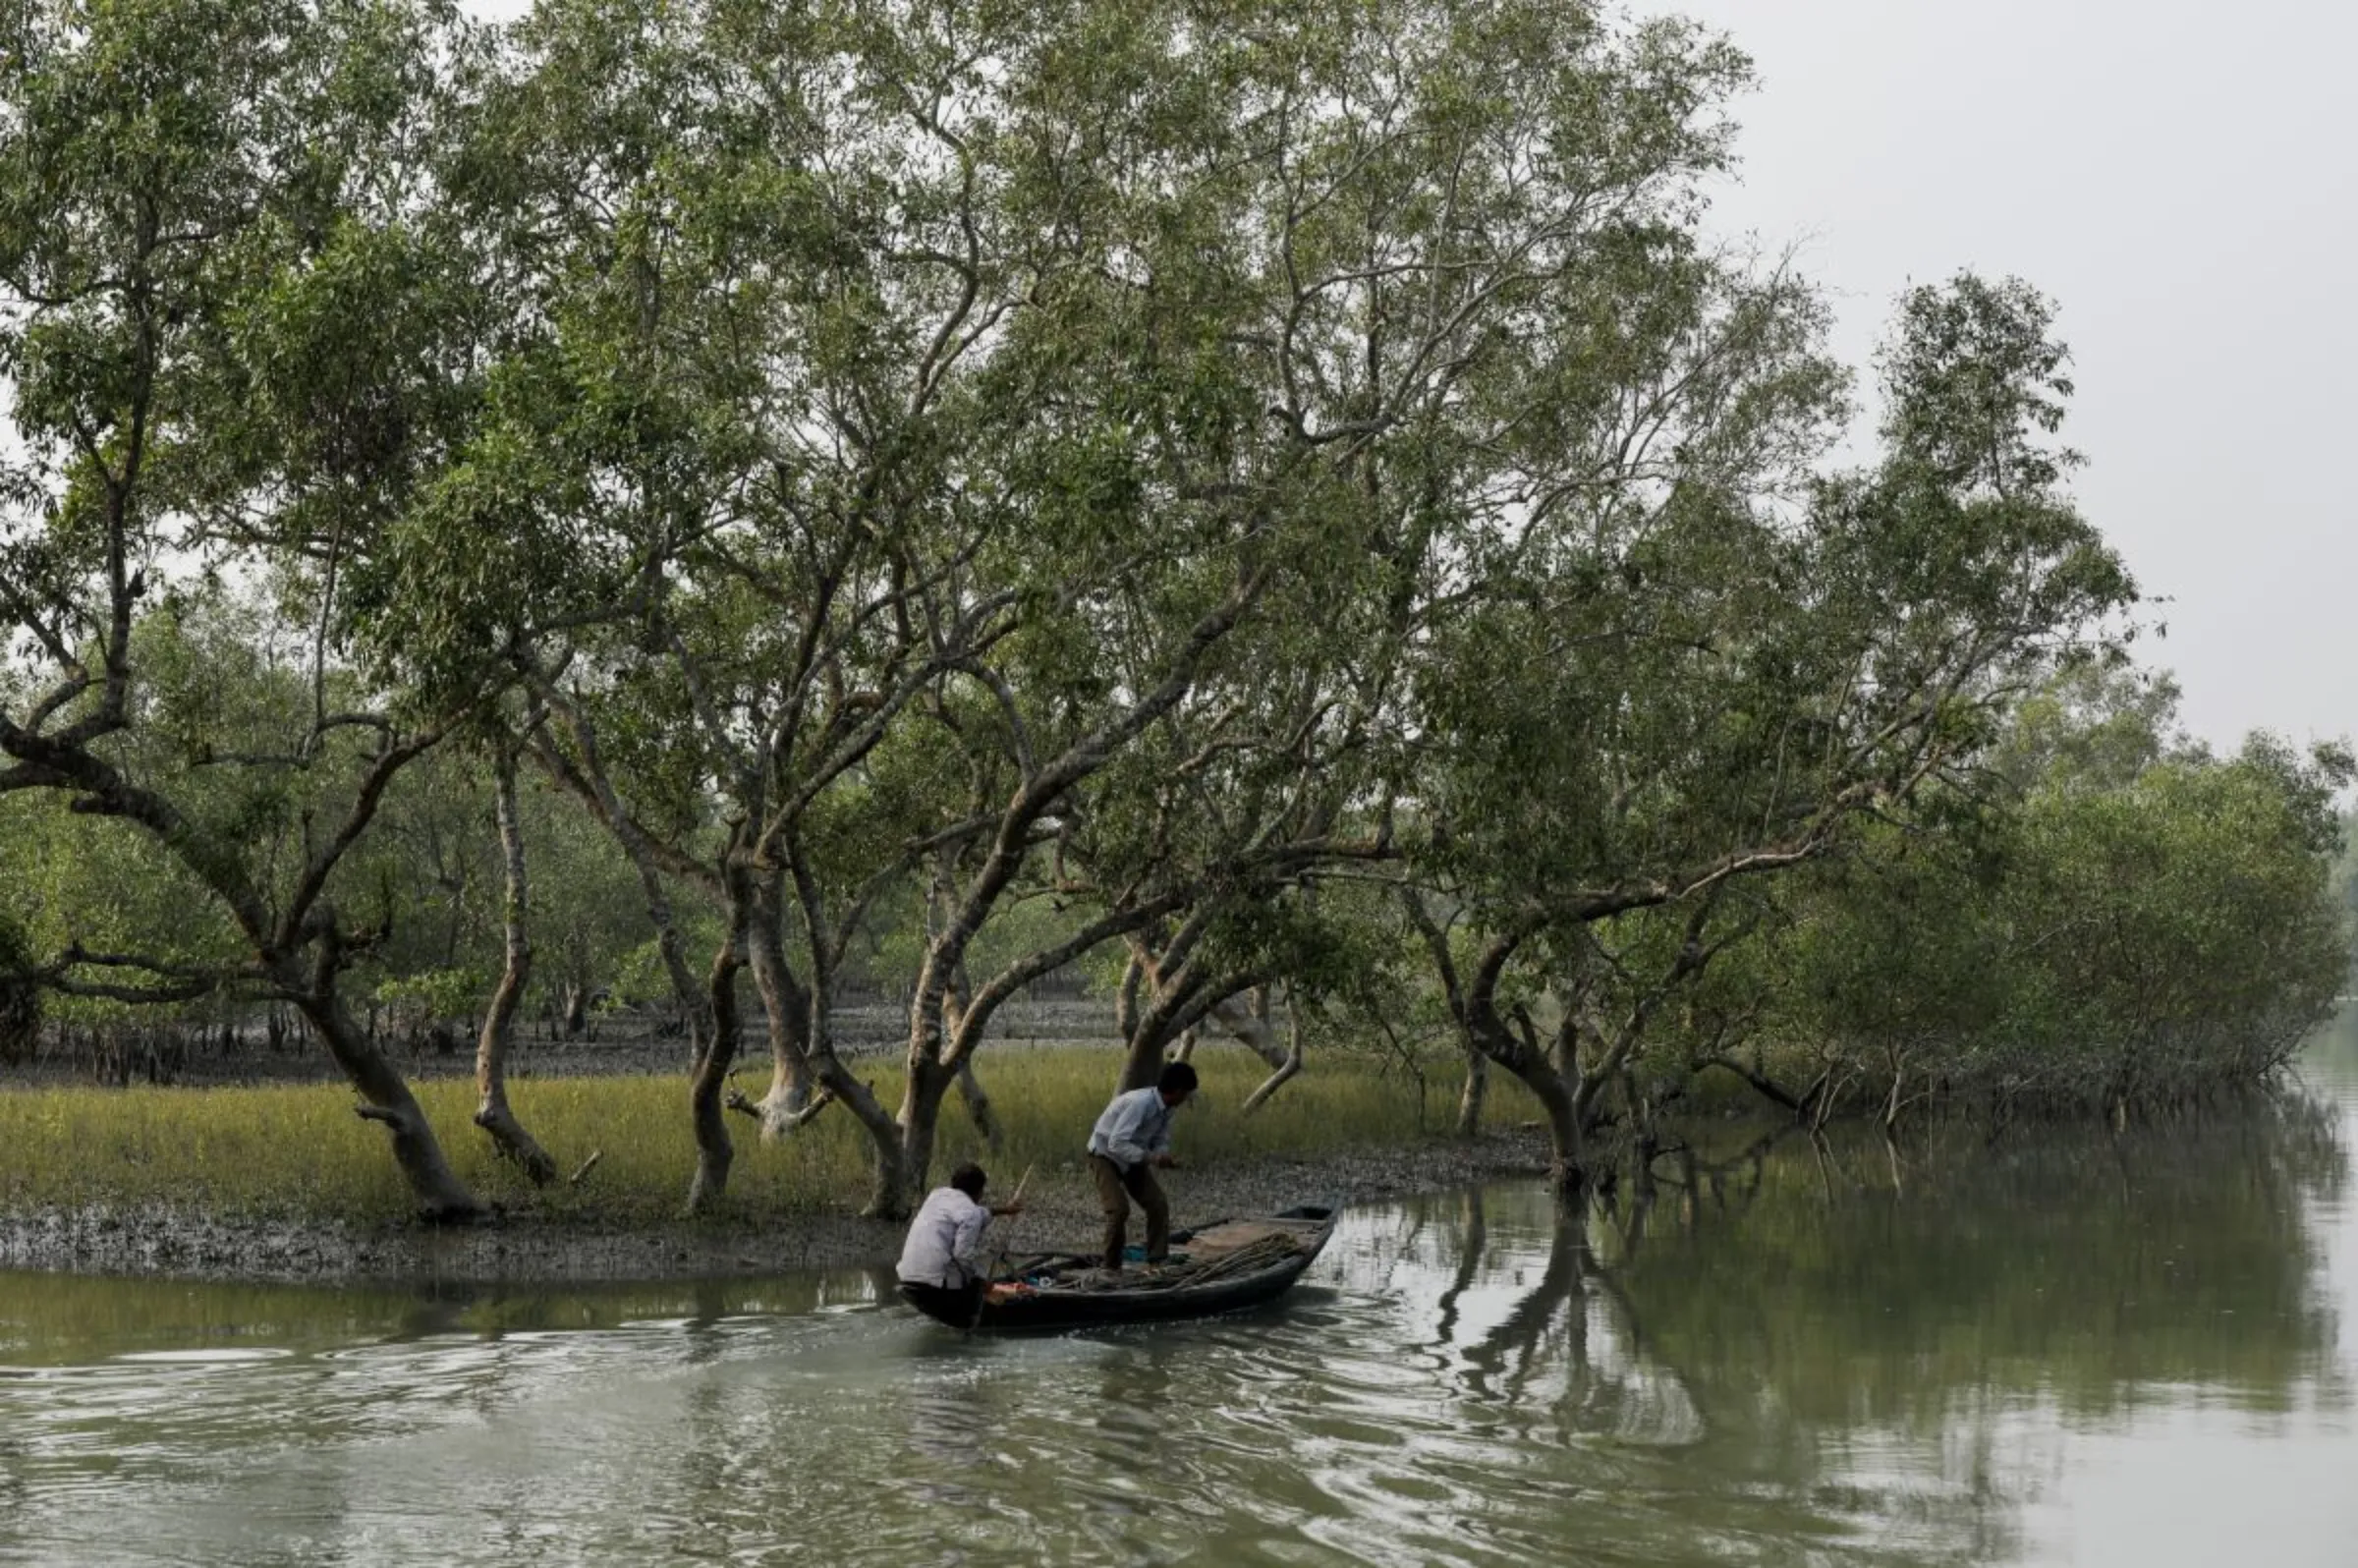 Men on a boat row past mangrove trees encircling the island of Satjelia in the Sundarbans, India, December 15, 2019. REUTERS/Anushree Fadnavis